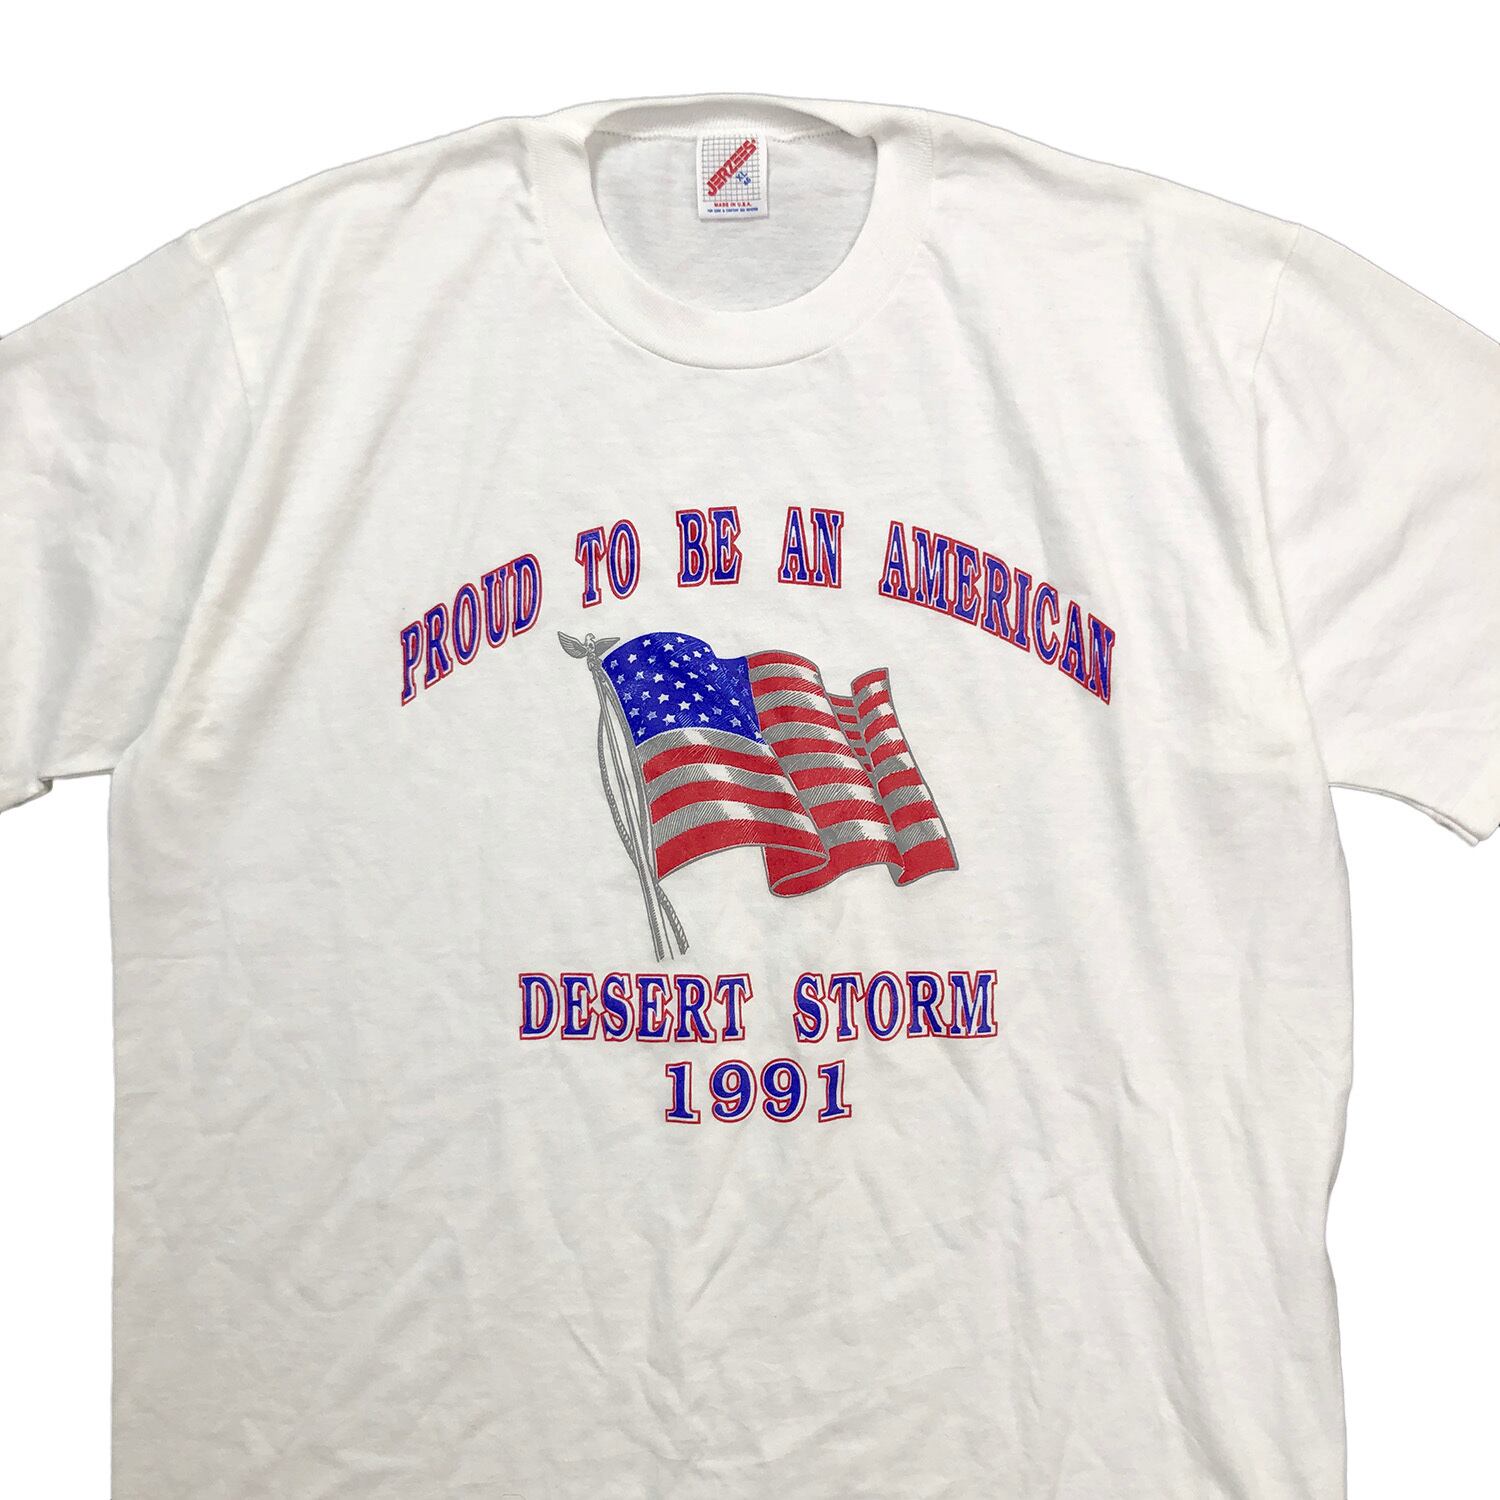 USA製 1991年 湾岸戦争 デザートストーム 砂漠の嵐作戦 星条旗 Tシャツ